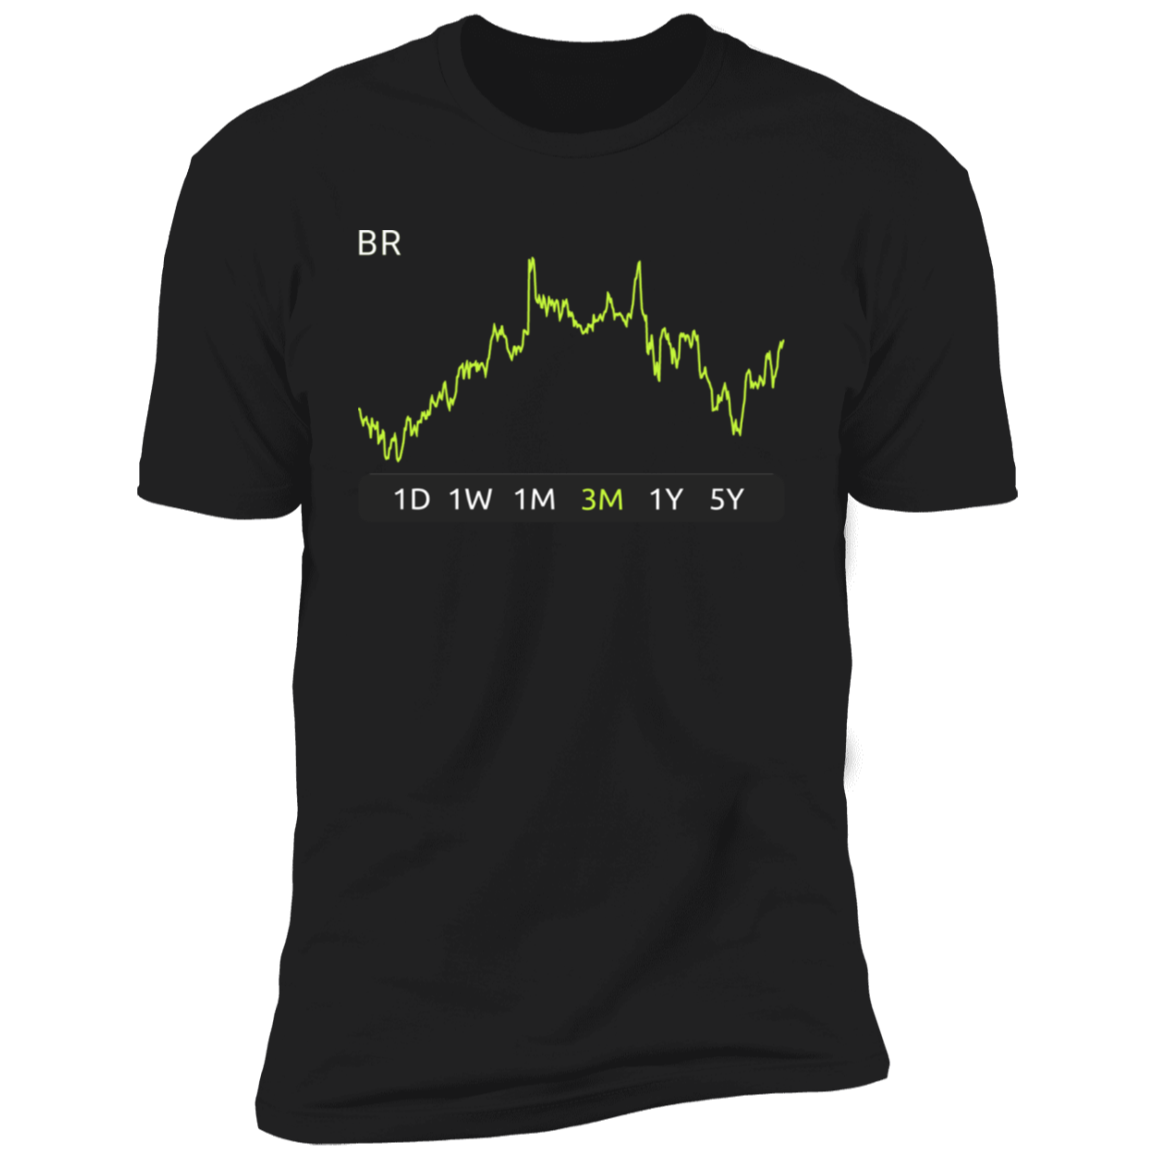 BR Stock 3m Premium T-Shirt